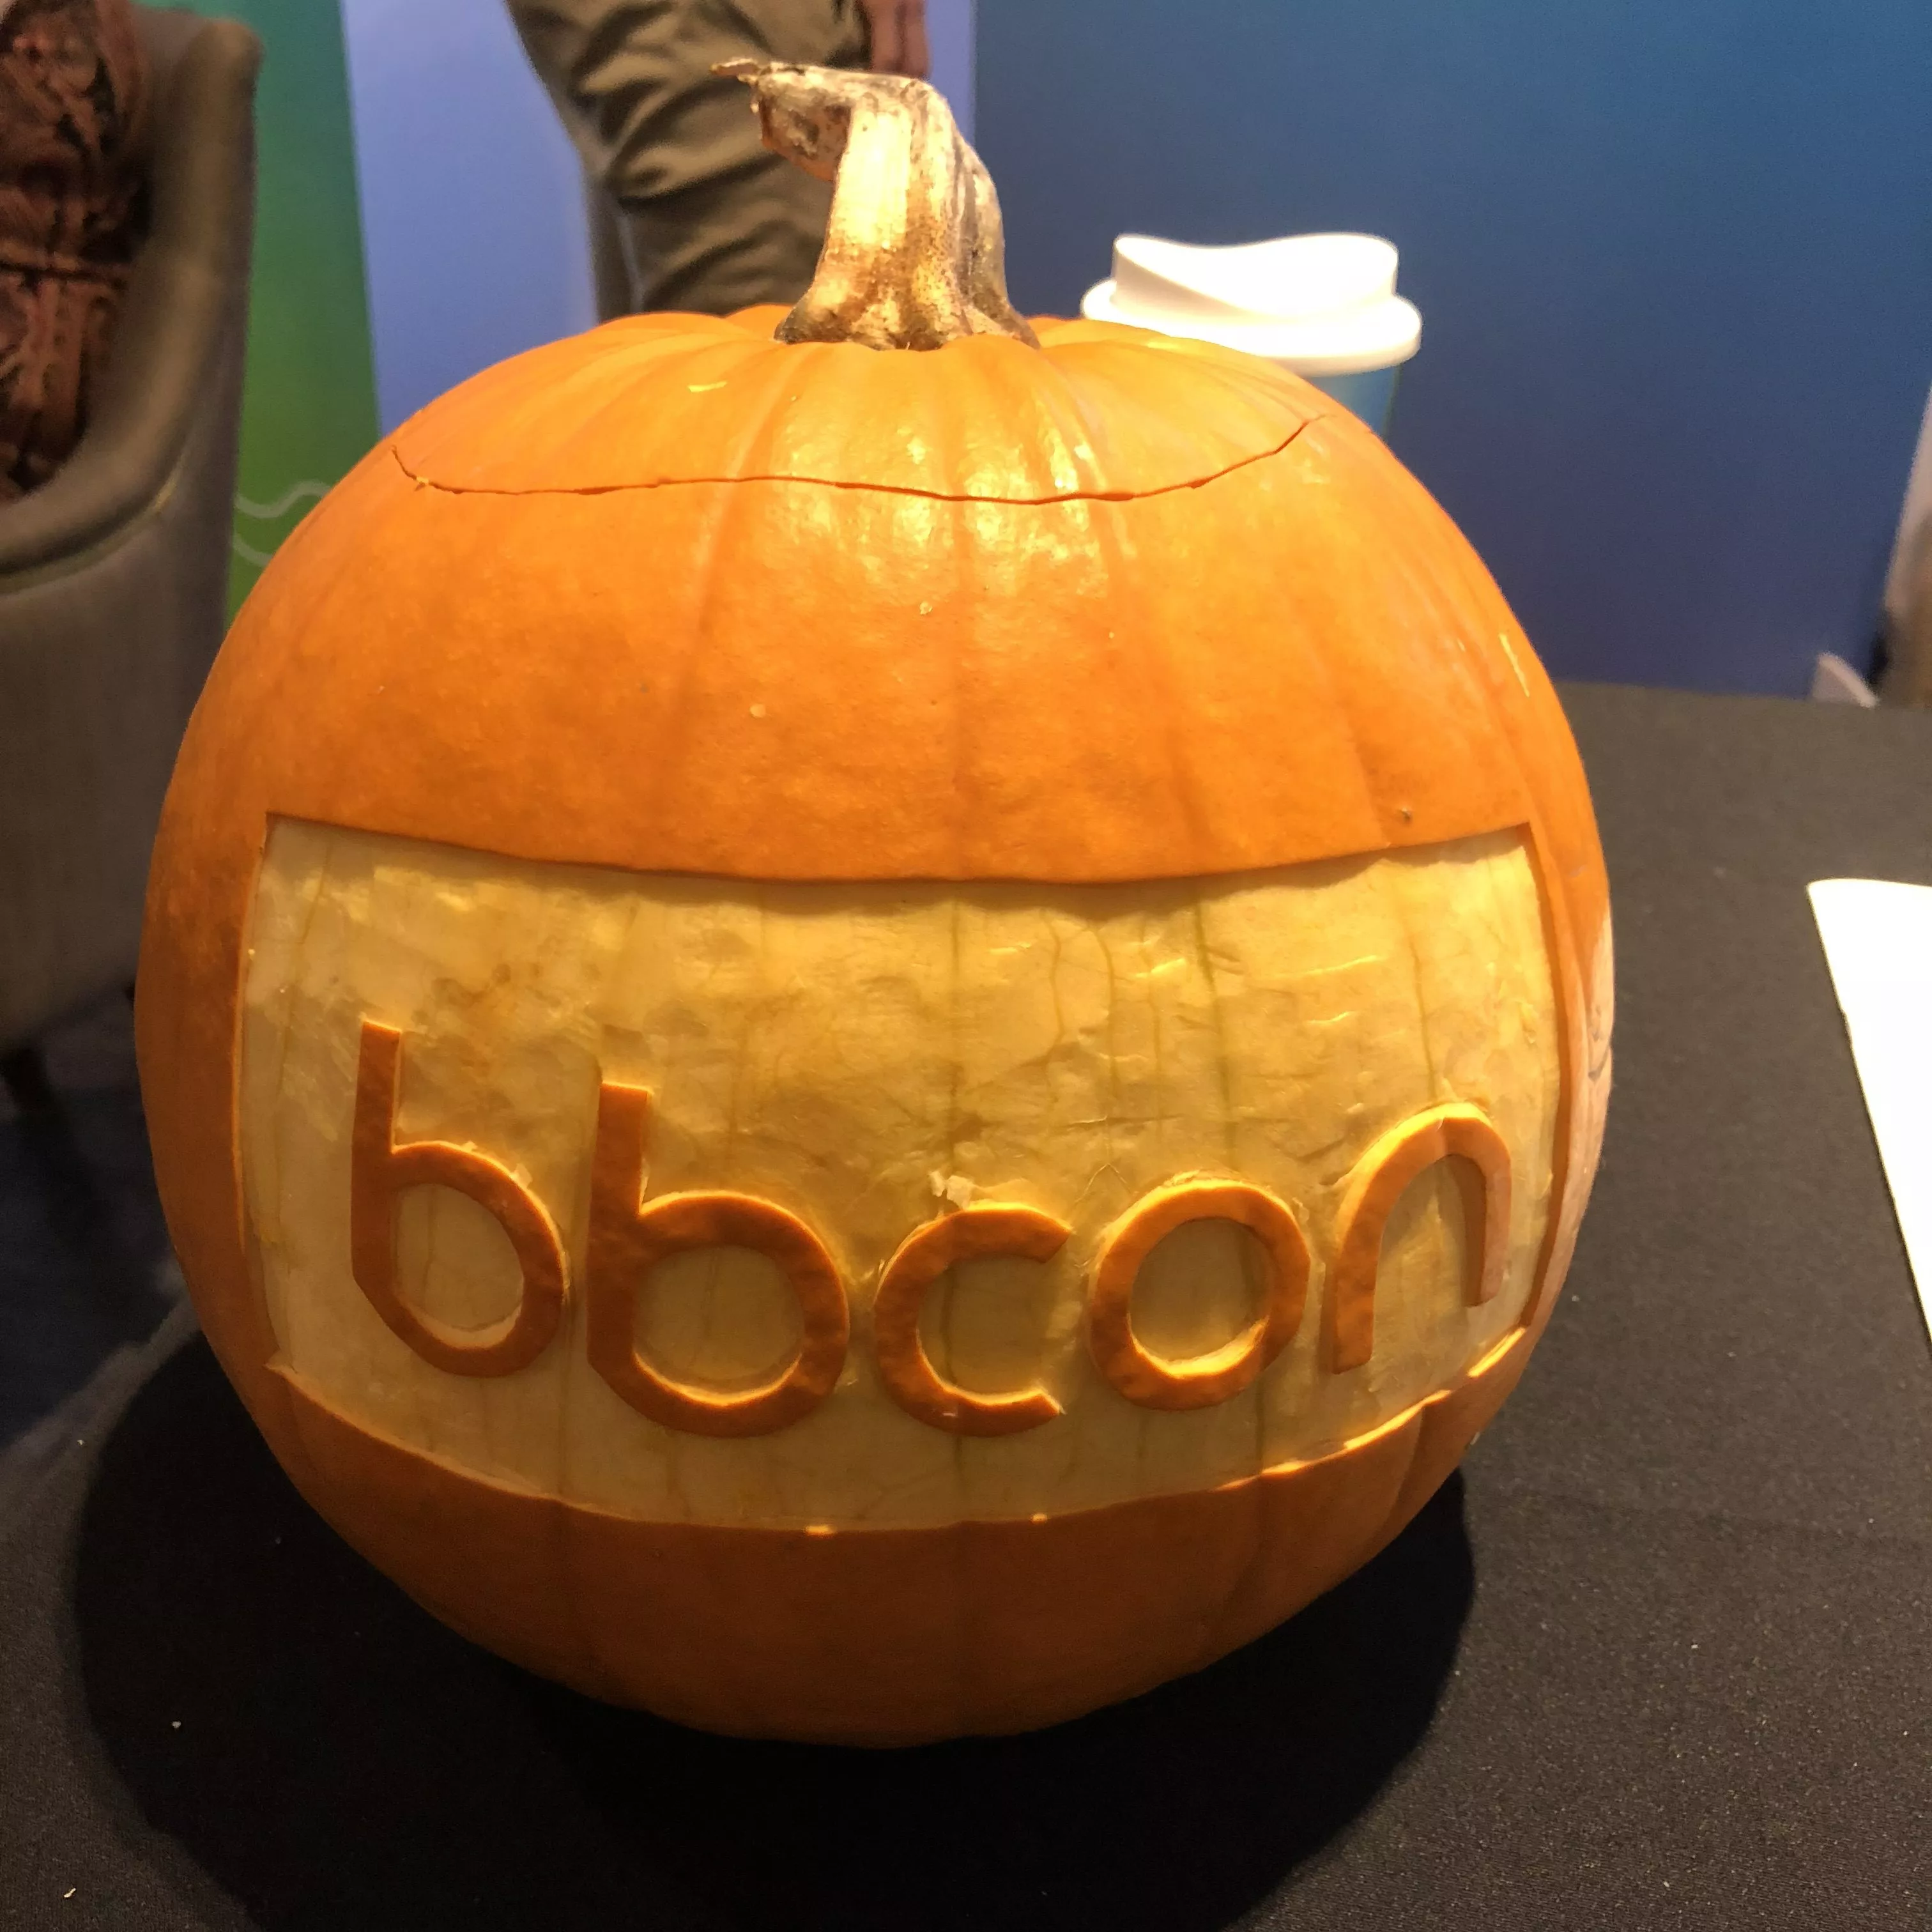 Blackbaud's bbcon pumpkin